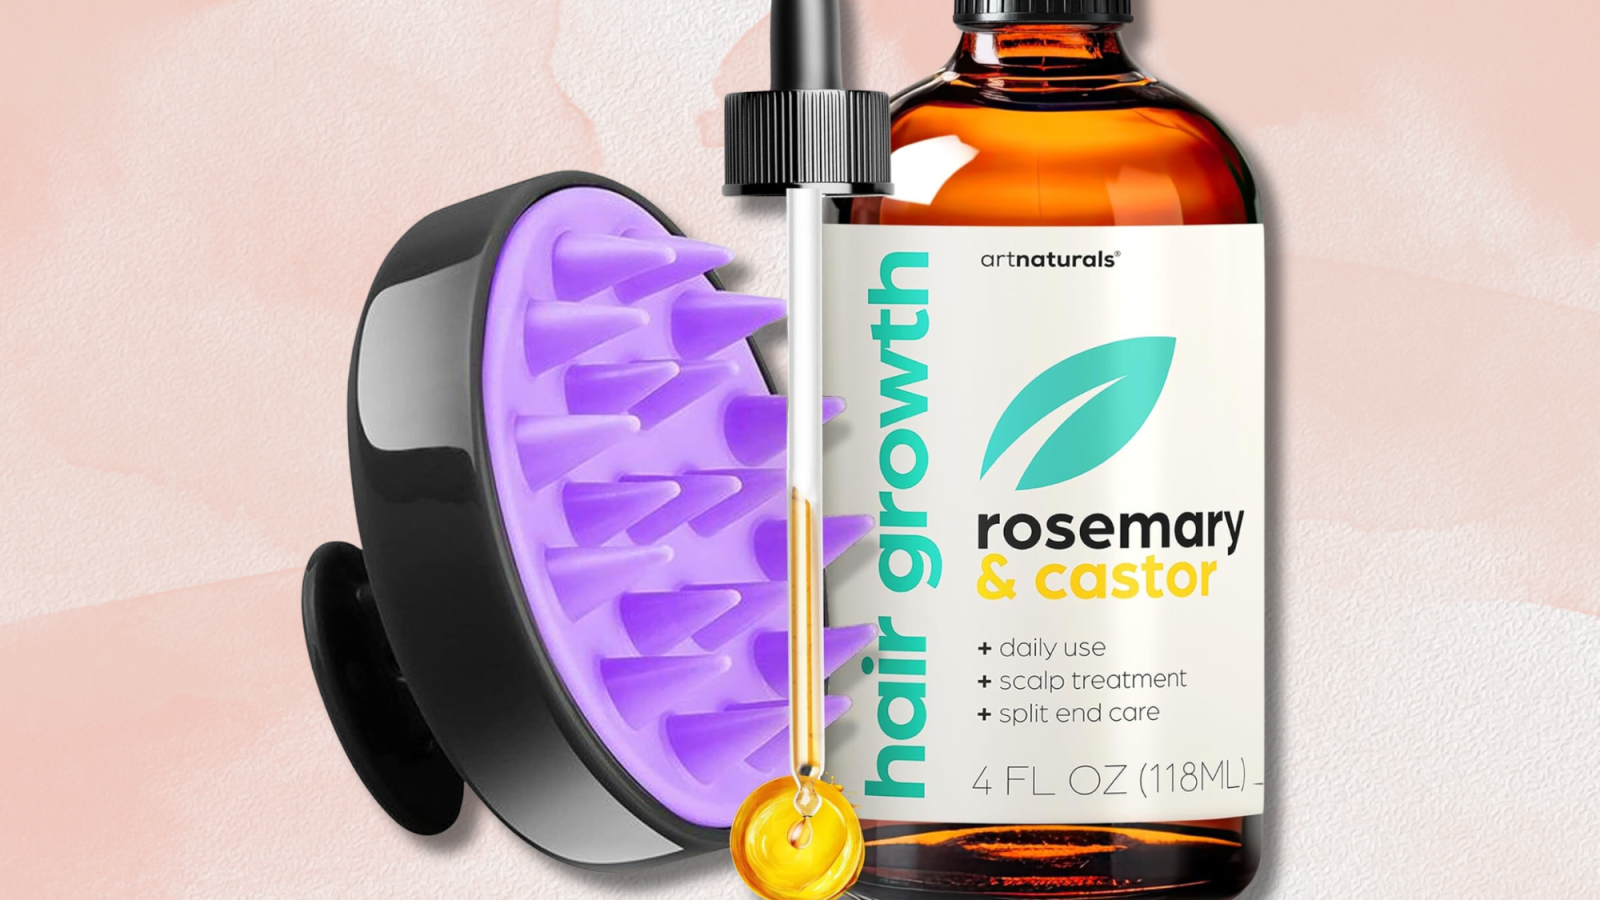 Artnaturals Organic Rosemary & Castor Hair and Scalp Oil